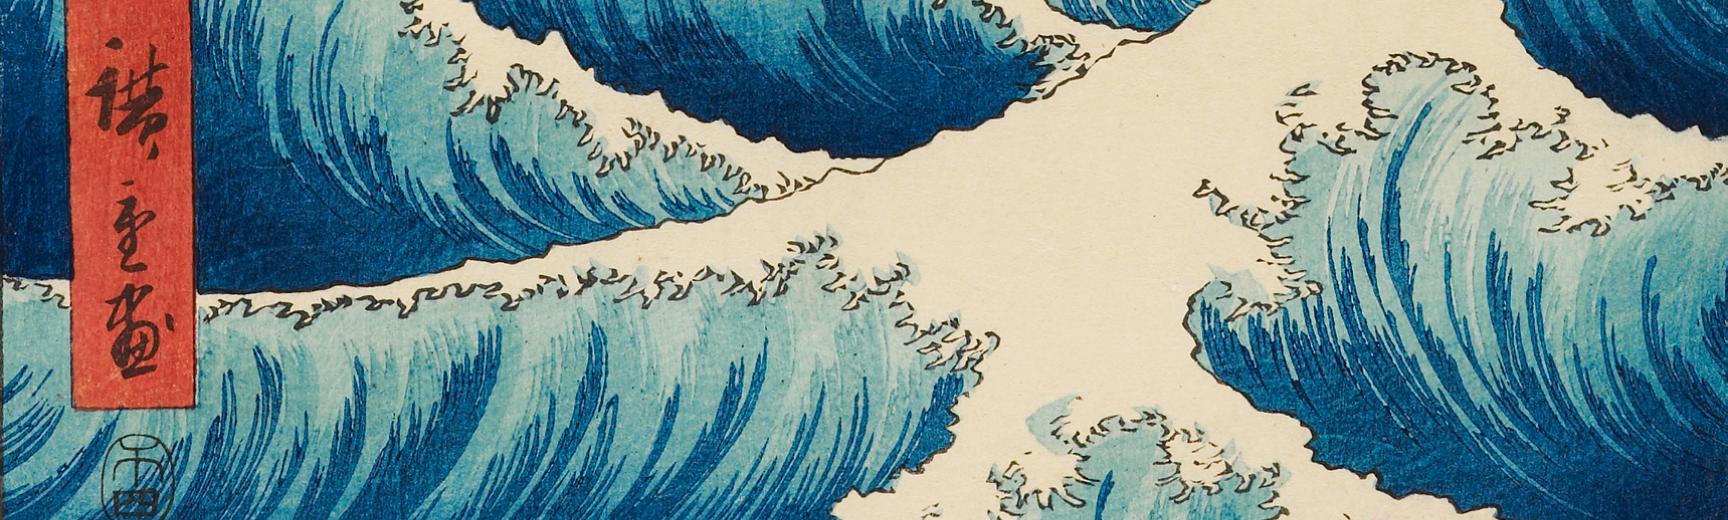 The Sea at Satton, Suroga Province, Japan, 1859